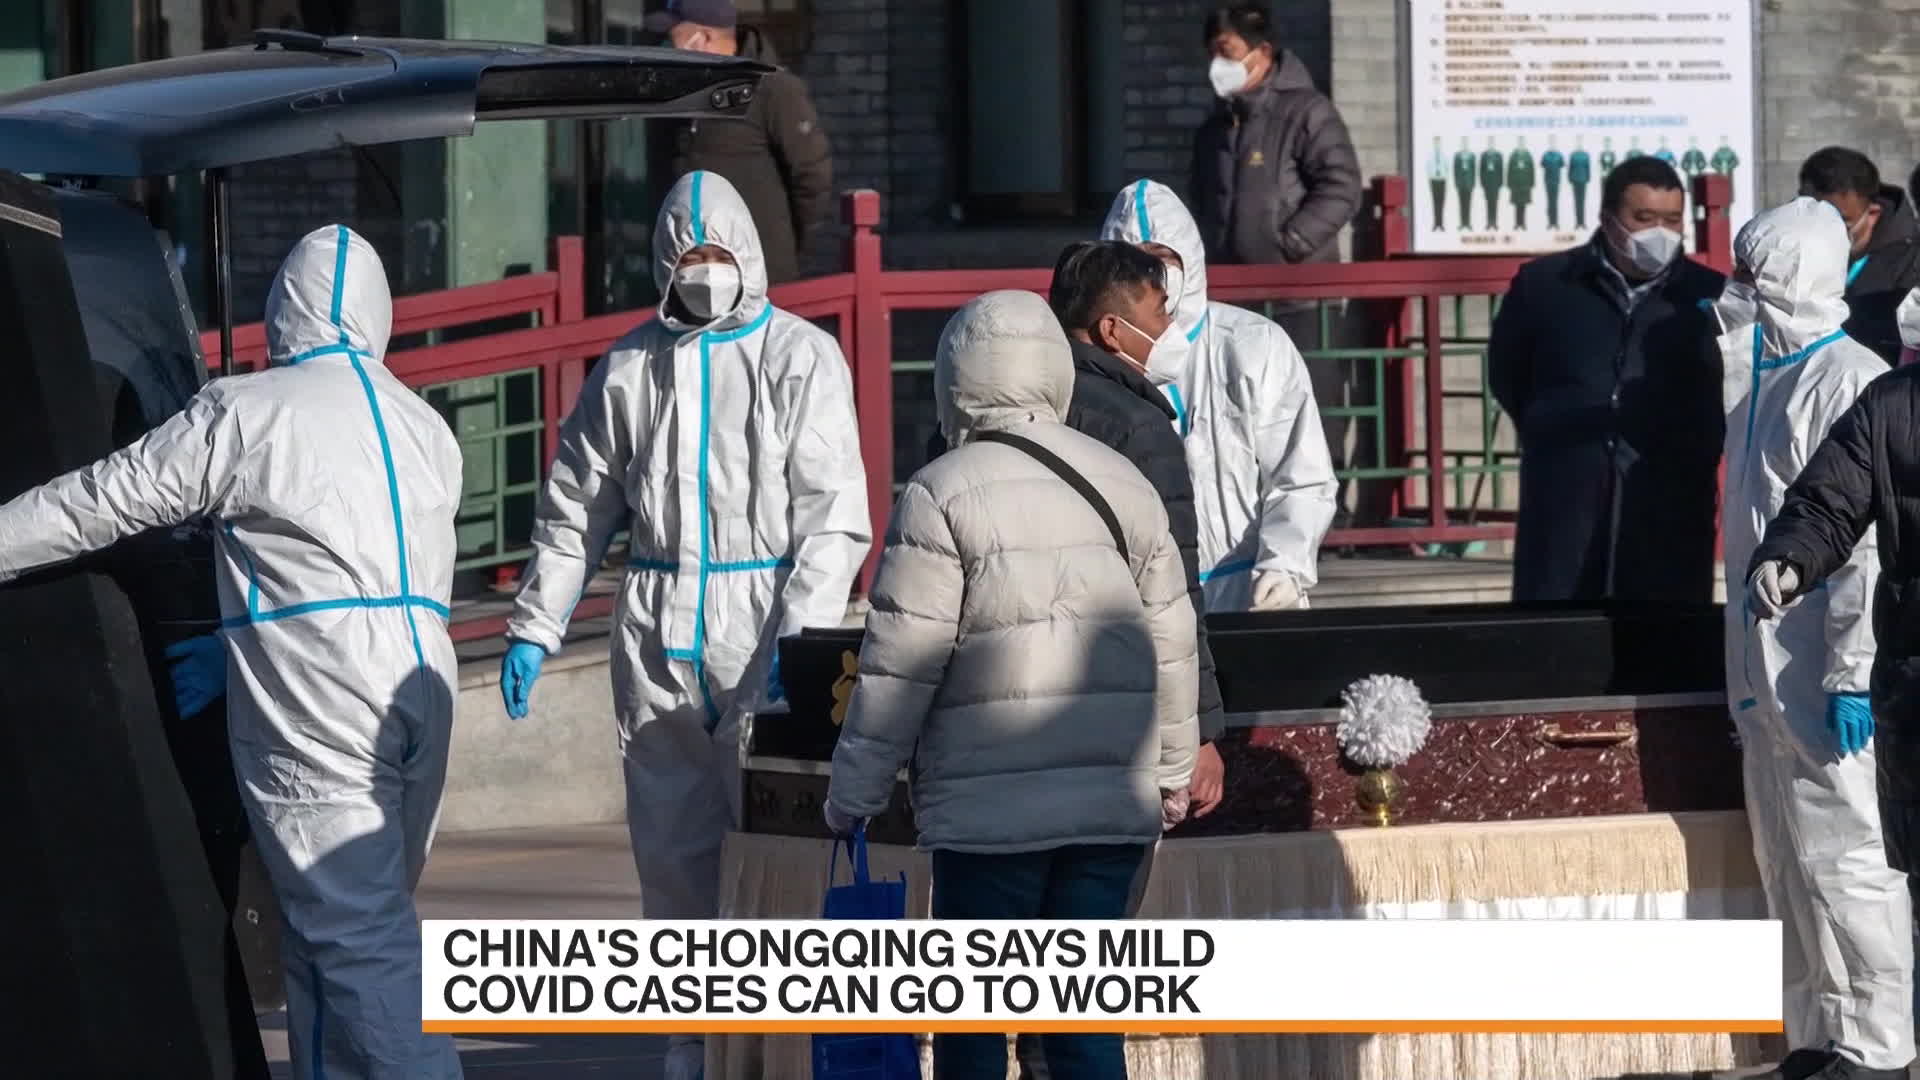 Many wonder if China's coronavirus recovery can be trusted